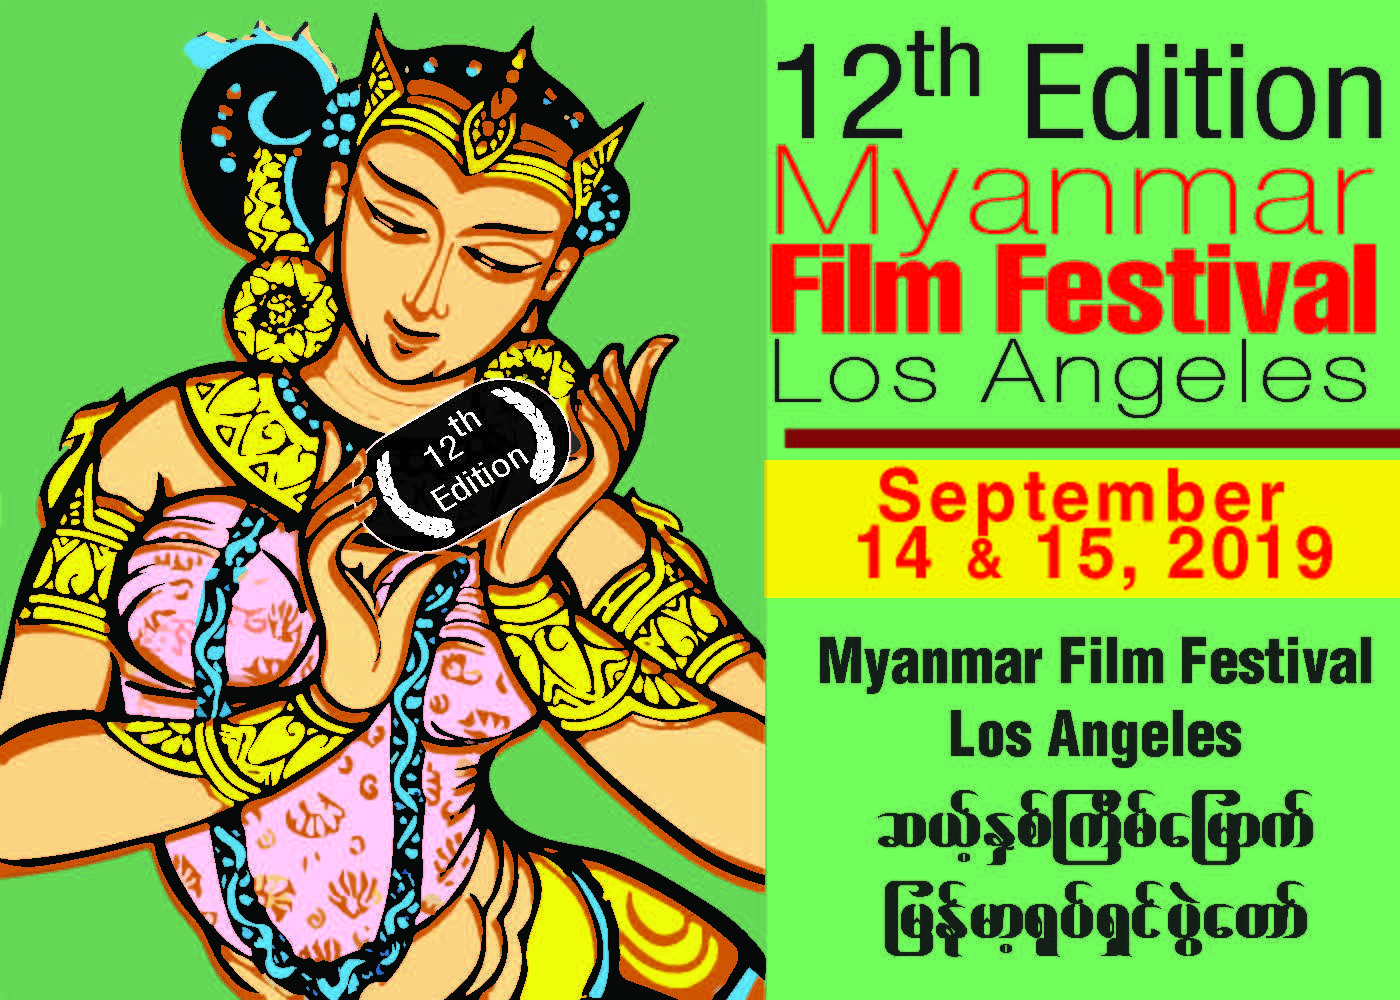 2019 Myanmar Film Festival of Los Angeles (12th Edition): September 14 & 15, 2019